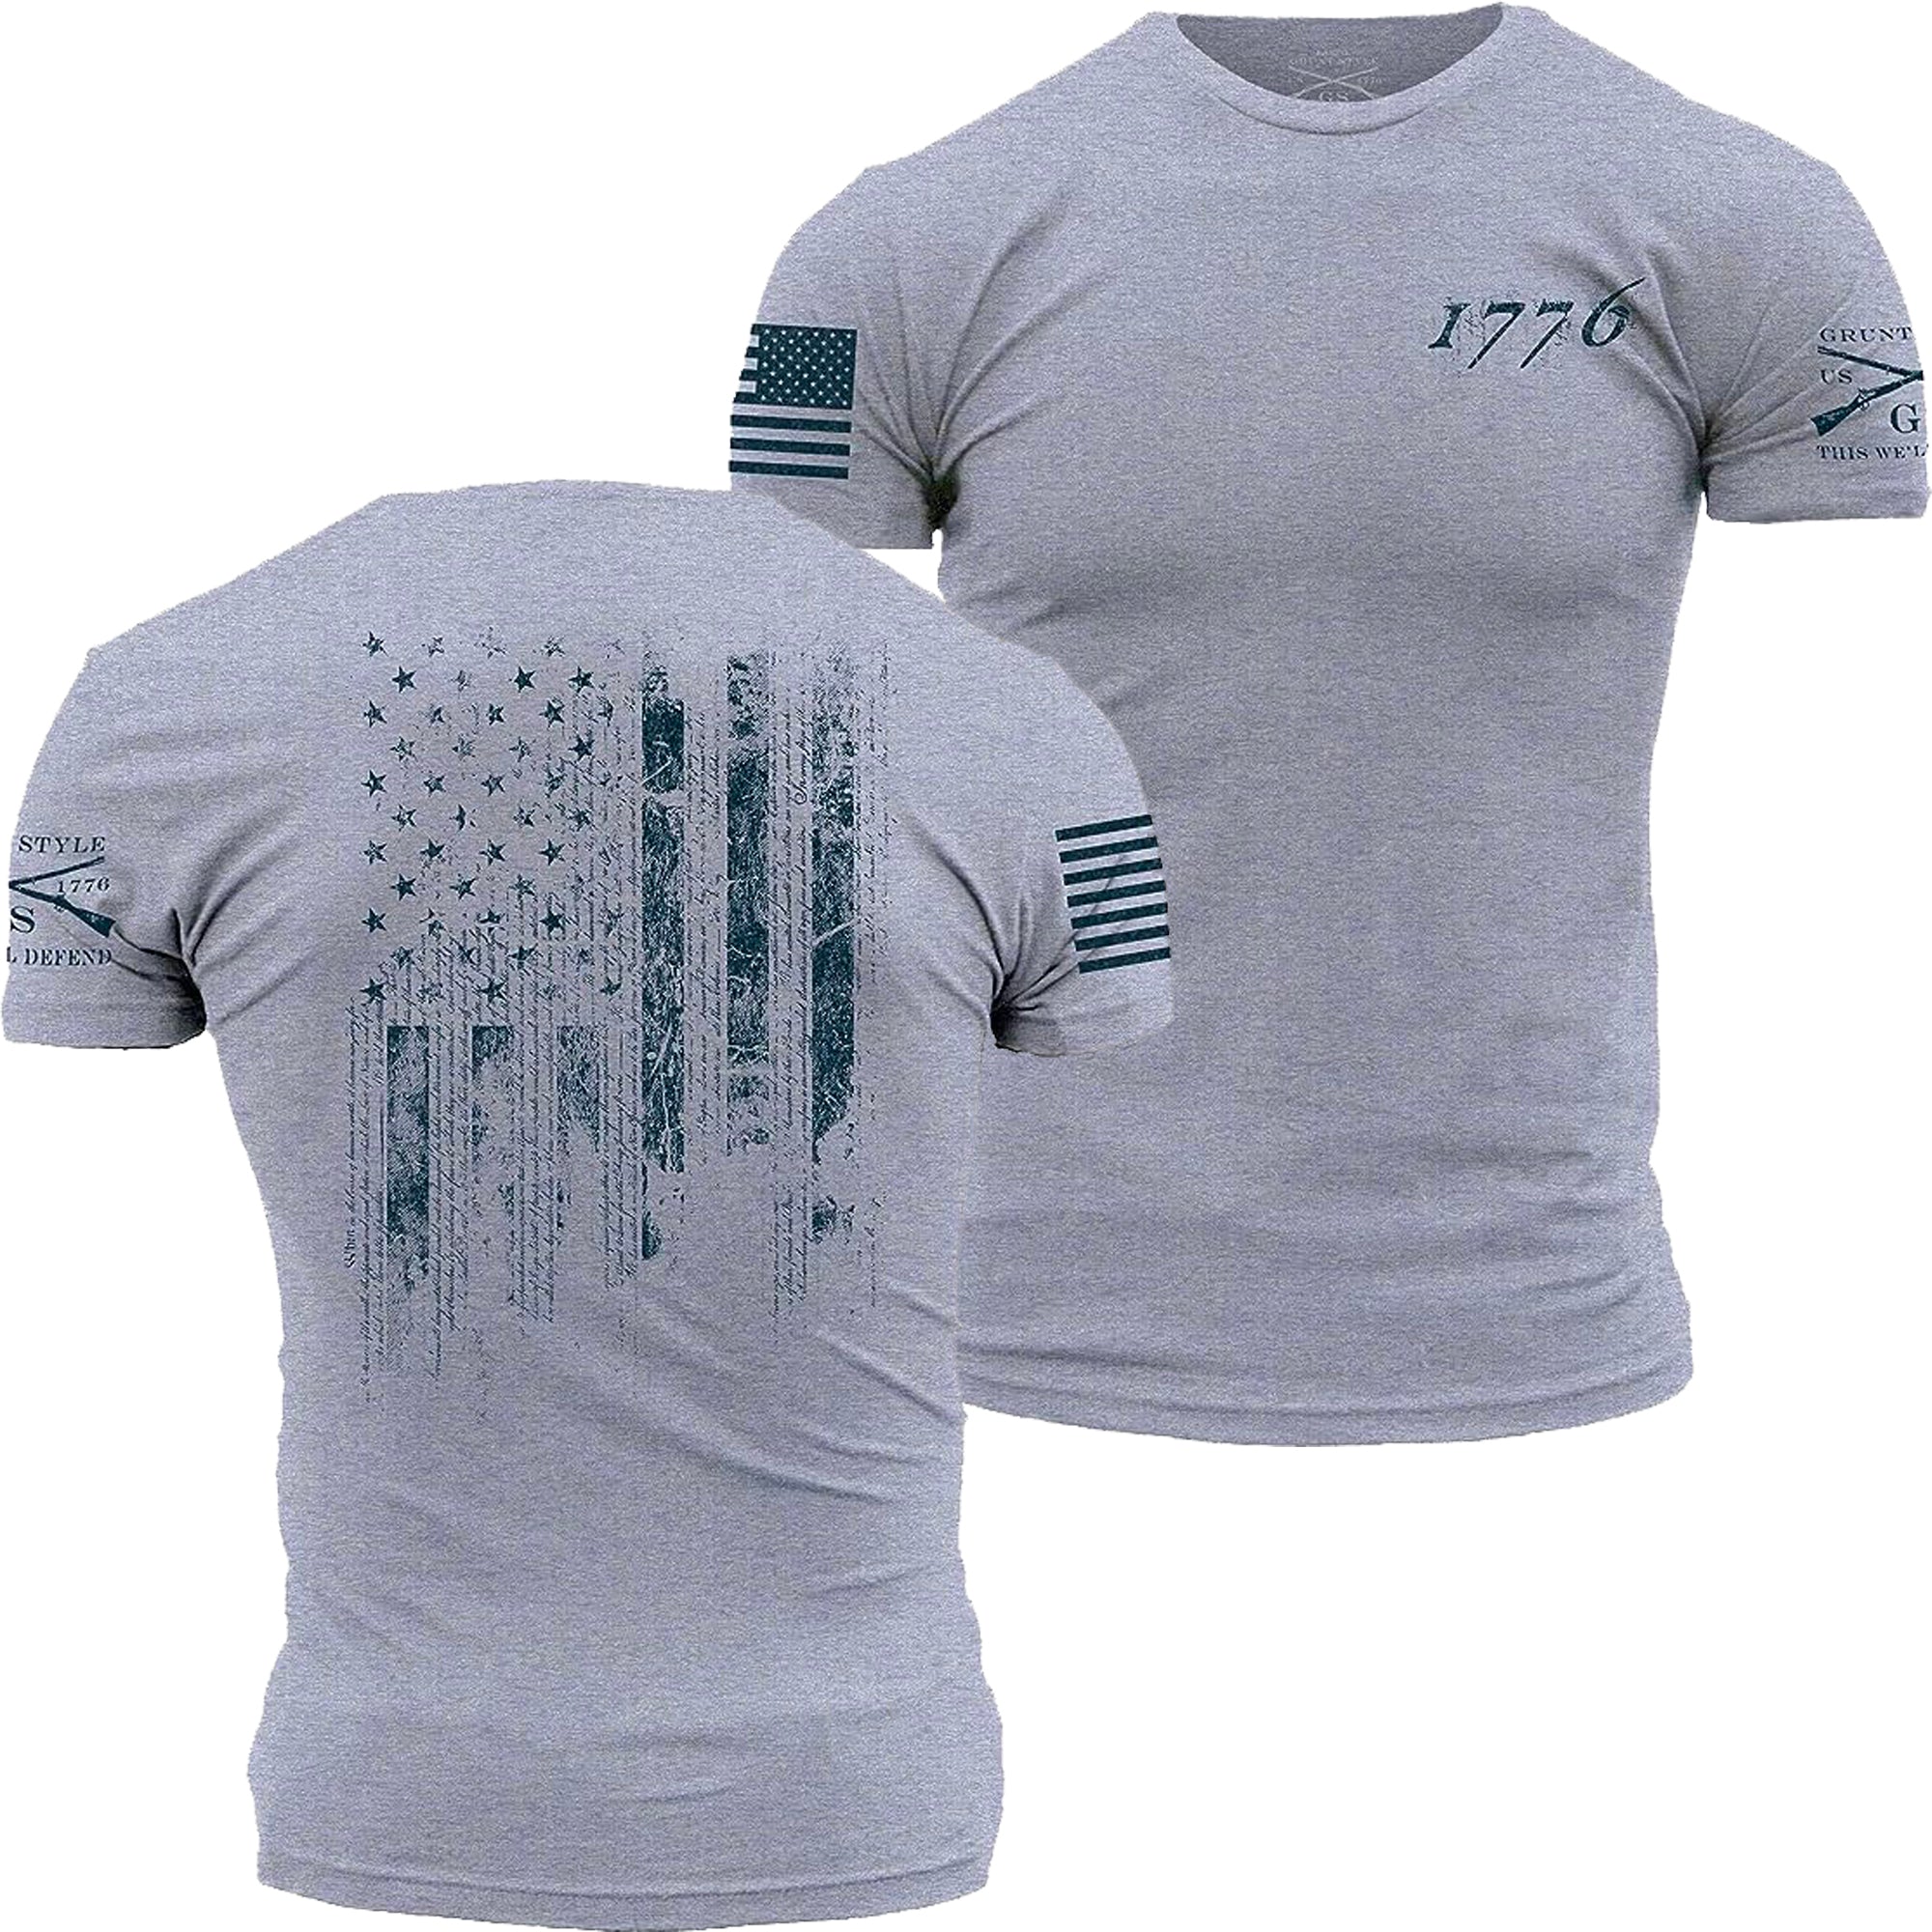 Grunt Style 1776 Flag T-Shirt Grunt Style